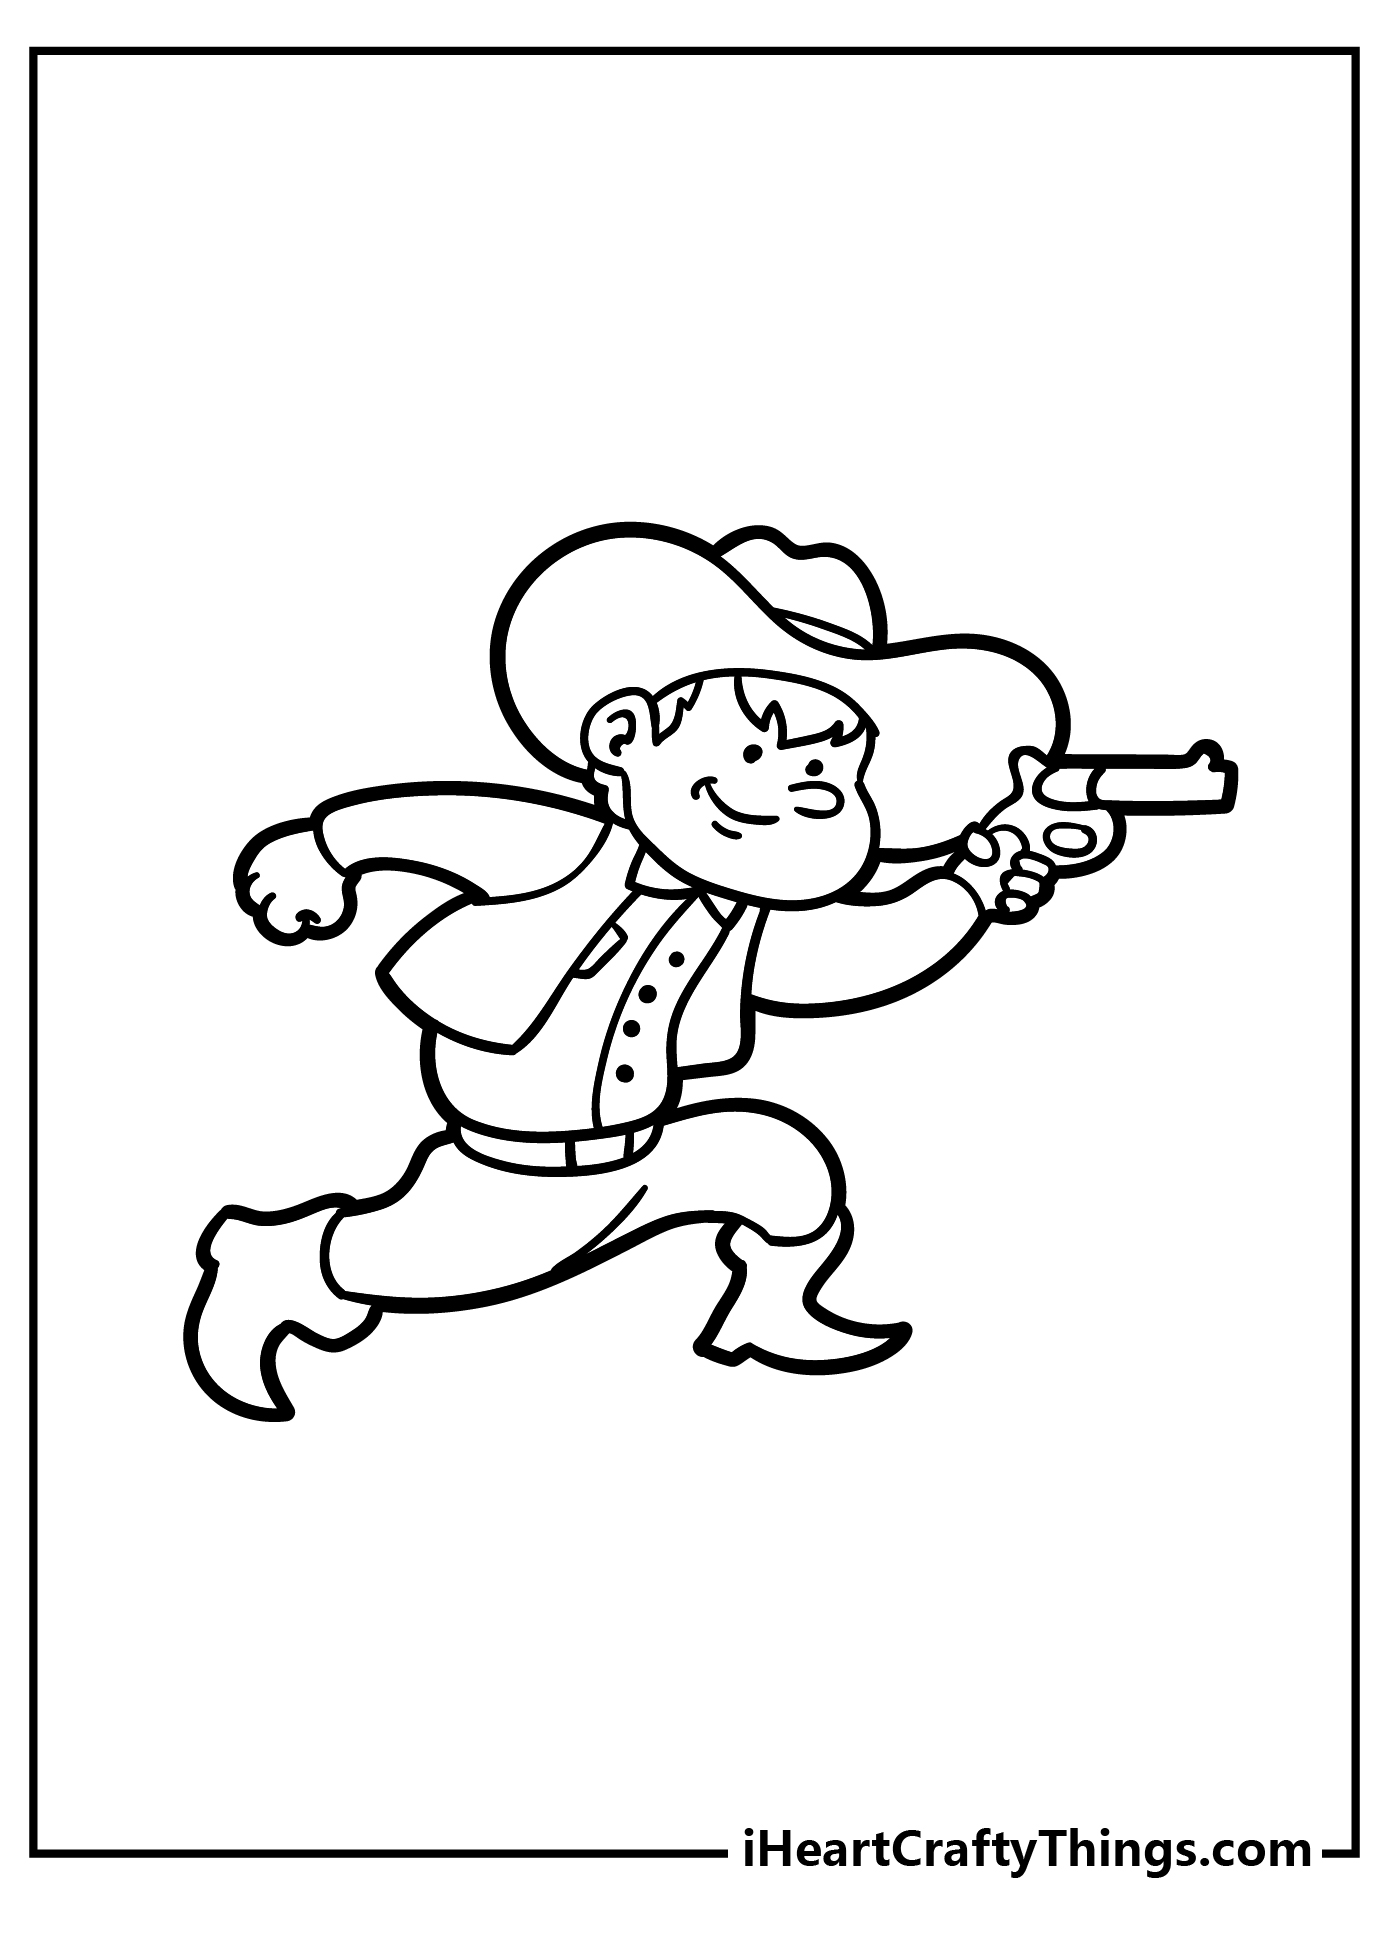 Cowboy Coloring Original Sheet for children free download